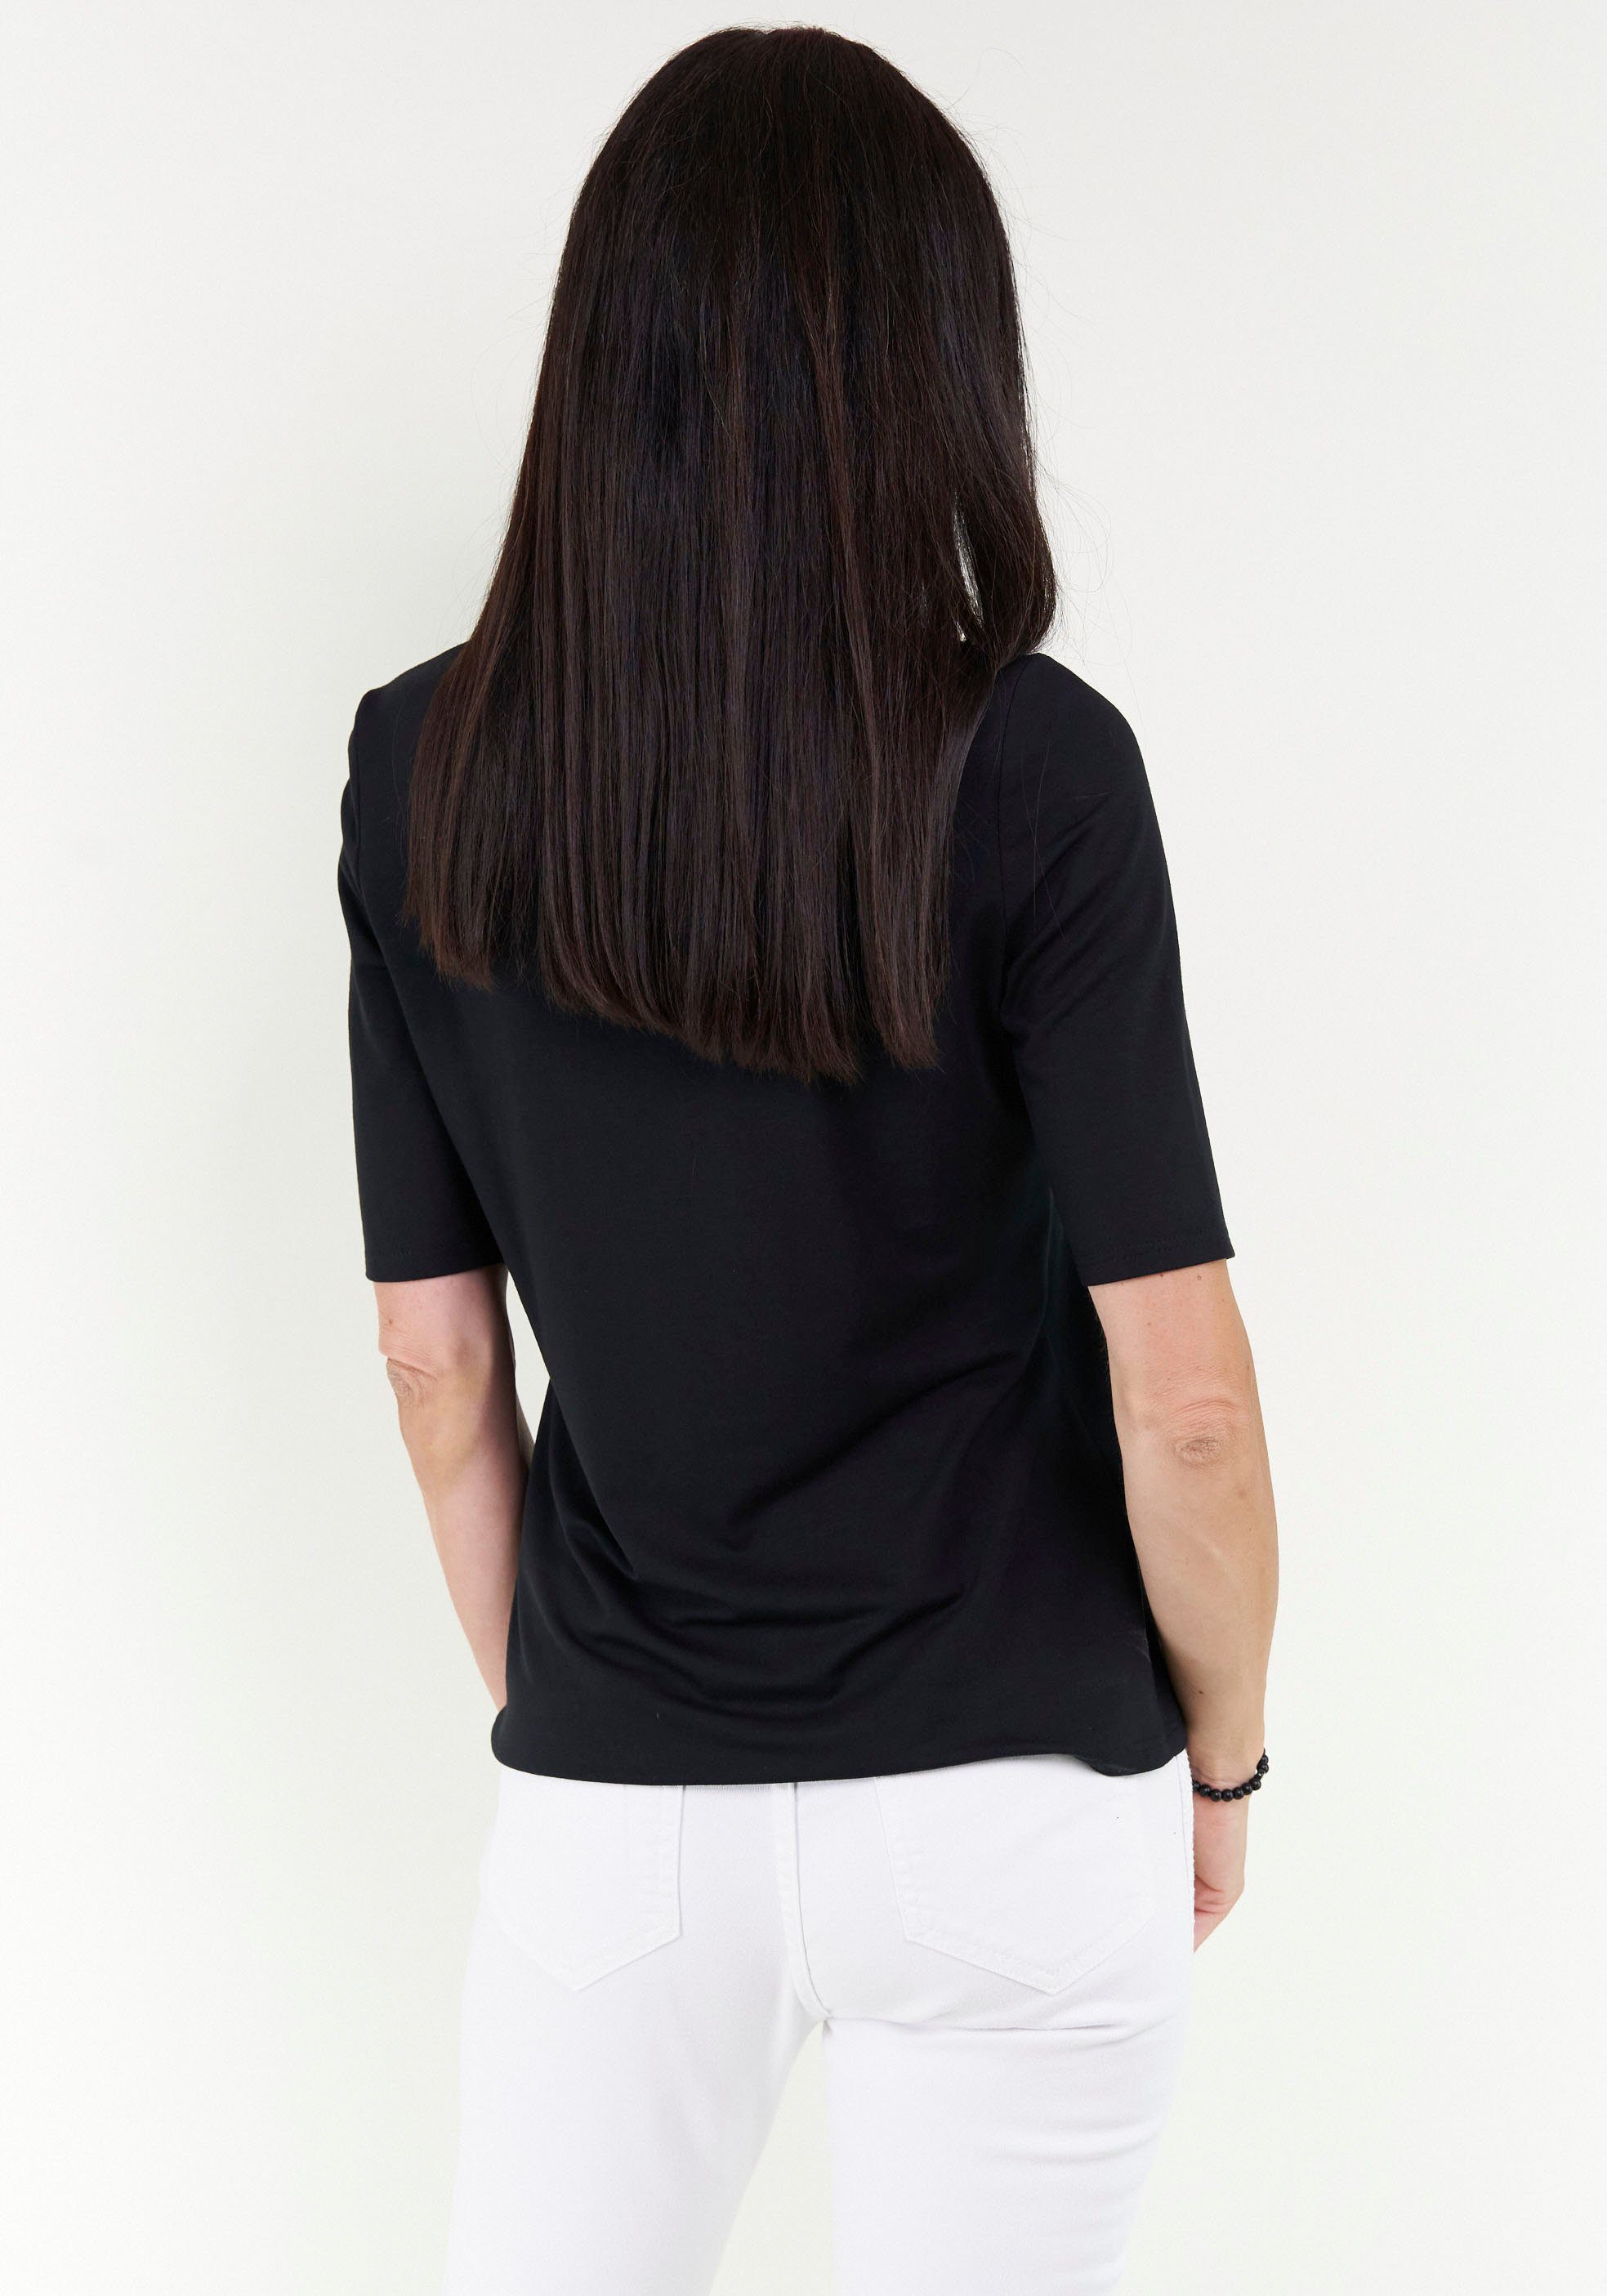 Seidel Moden V-Shirt mit Halbarm GERMANY Material, schwarz MADE IN softem aus